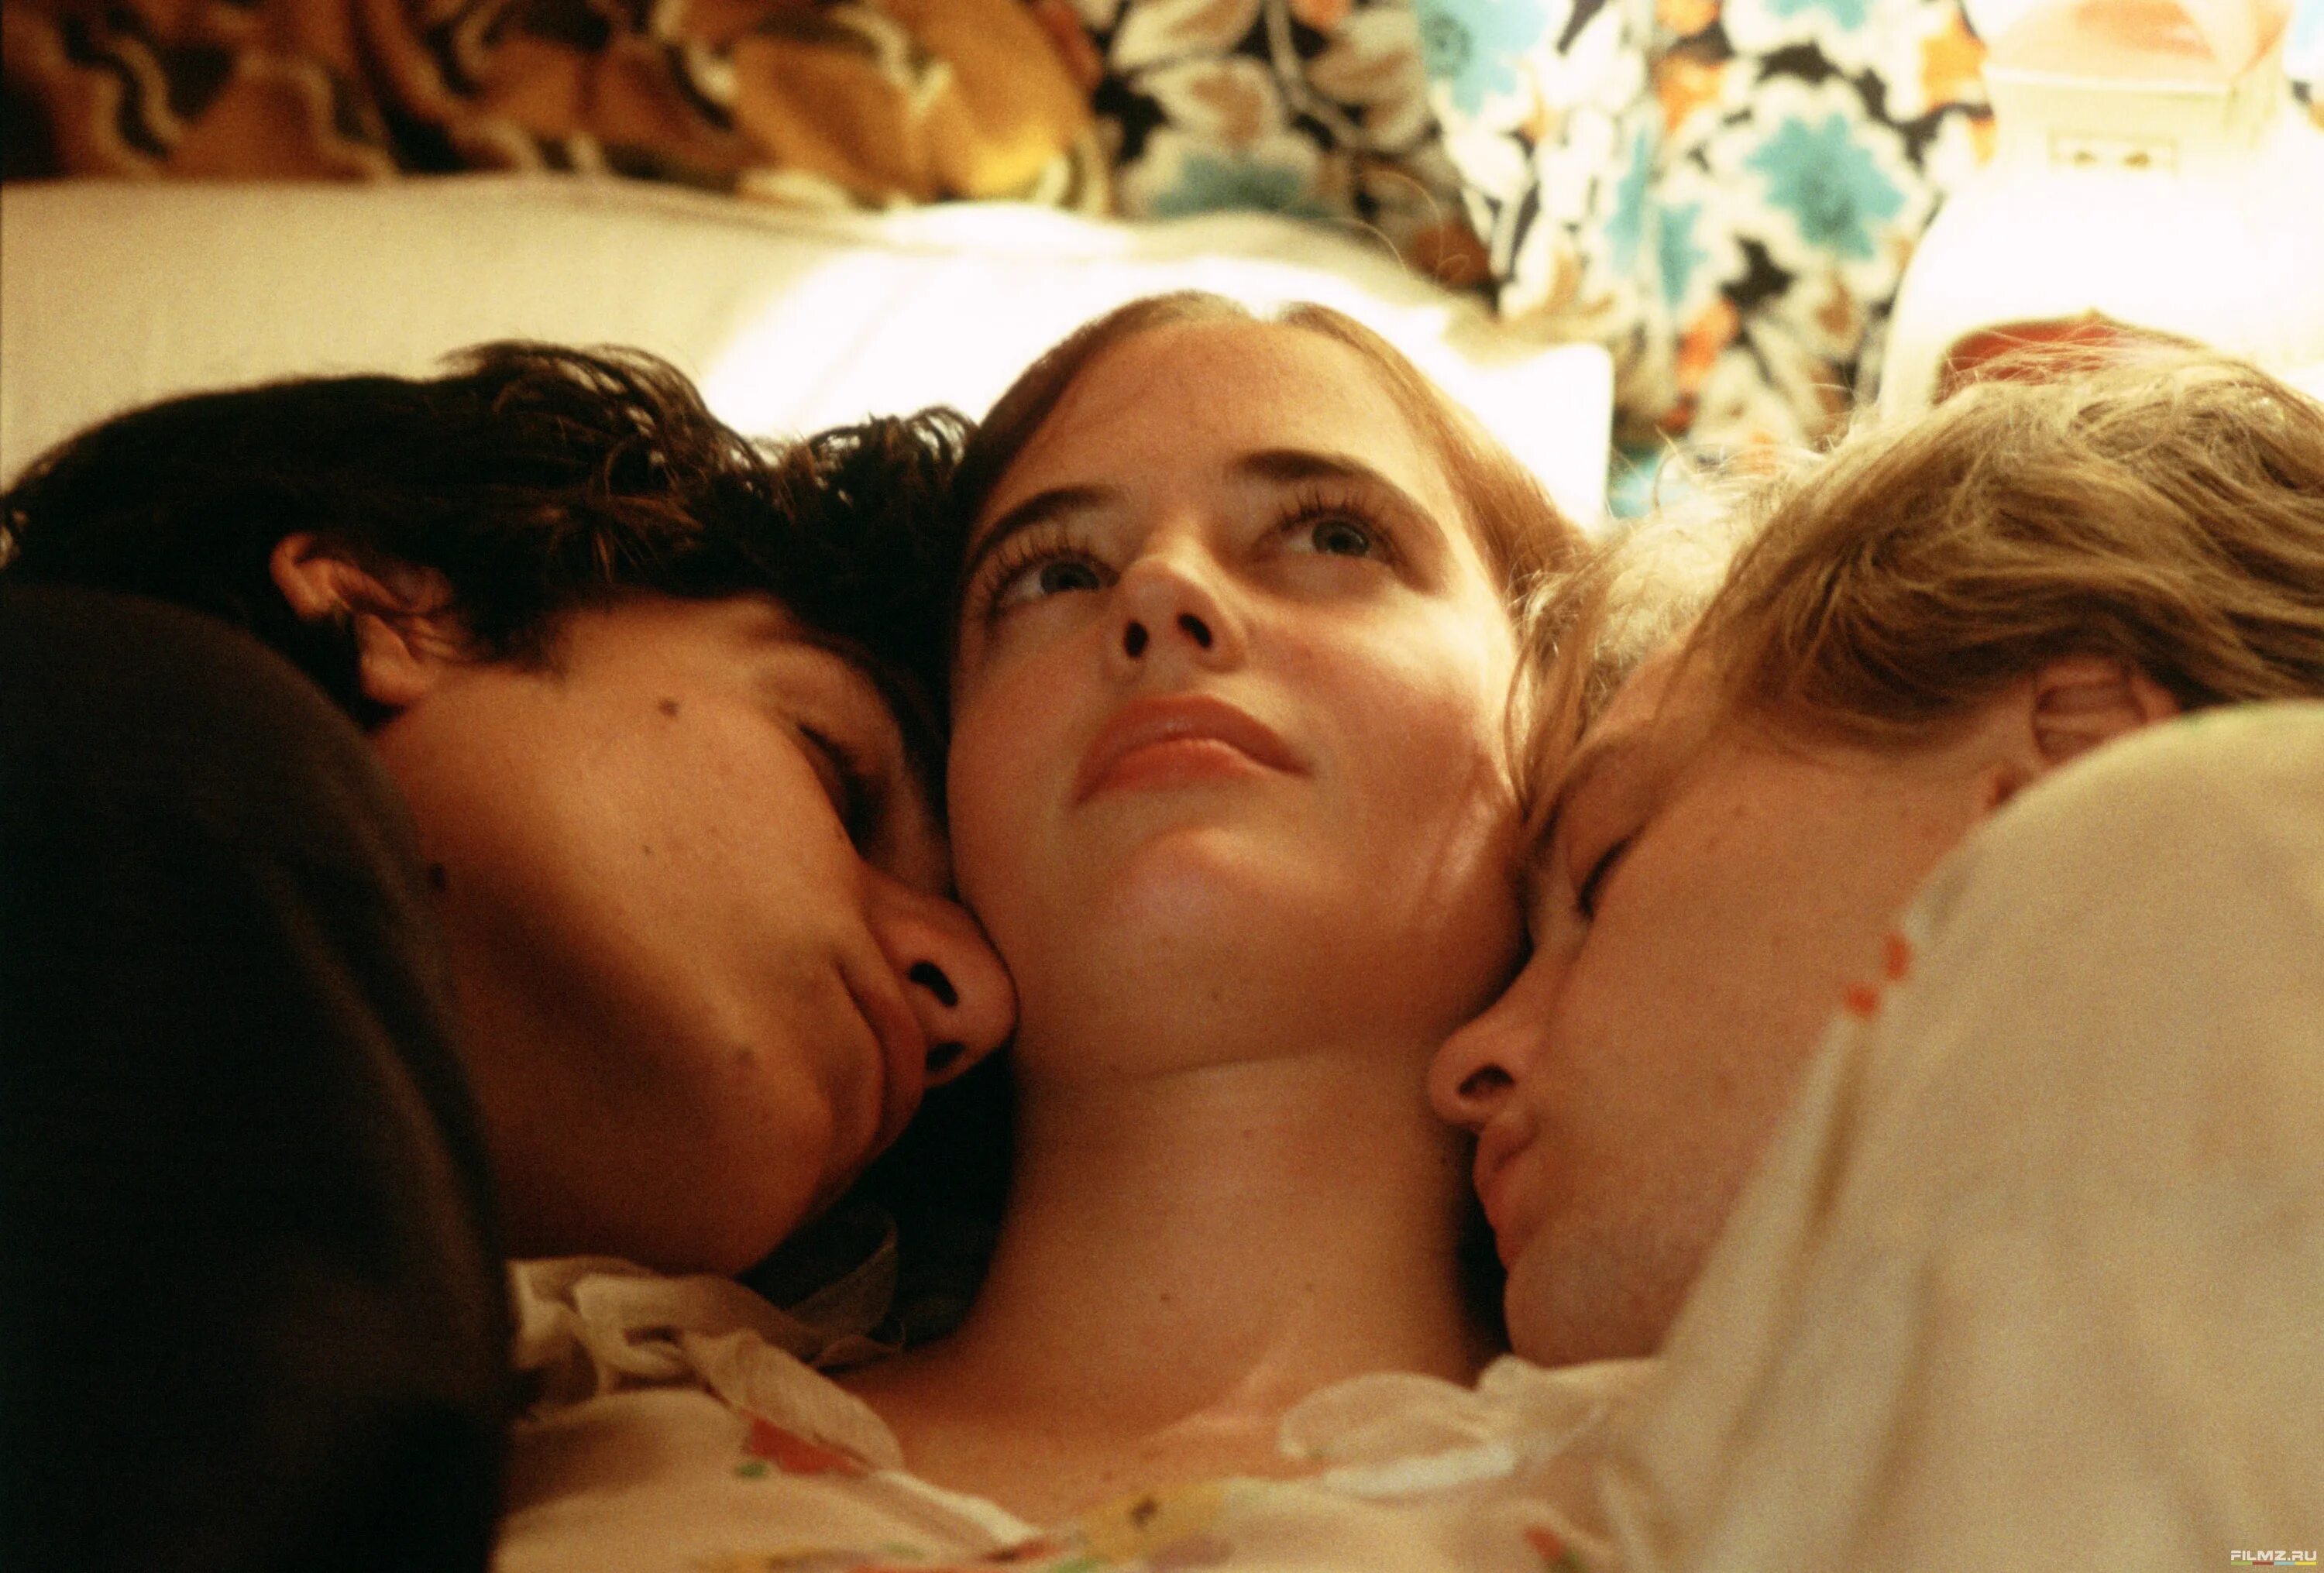 Threesome love. Мечтатели (the Dreamers), 2003, Режиссер - Бернардо Бертолуччи. Мечтатели Бернардо Бертолуччи.